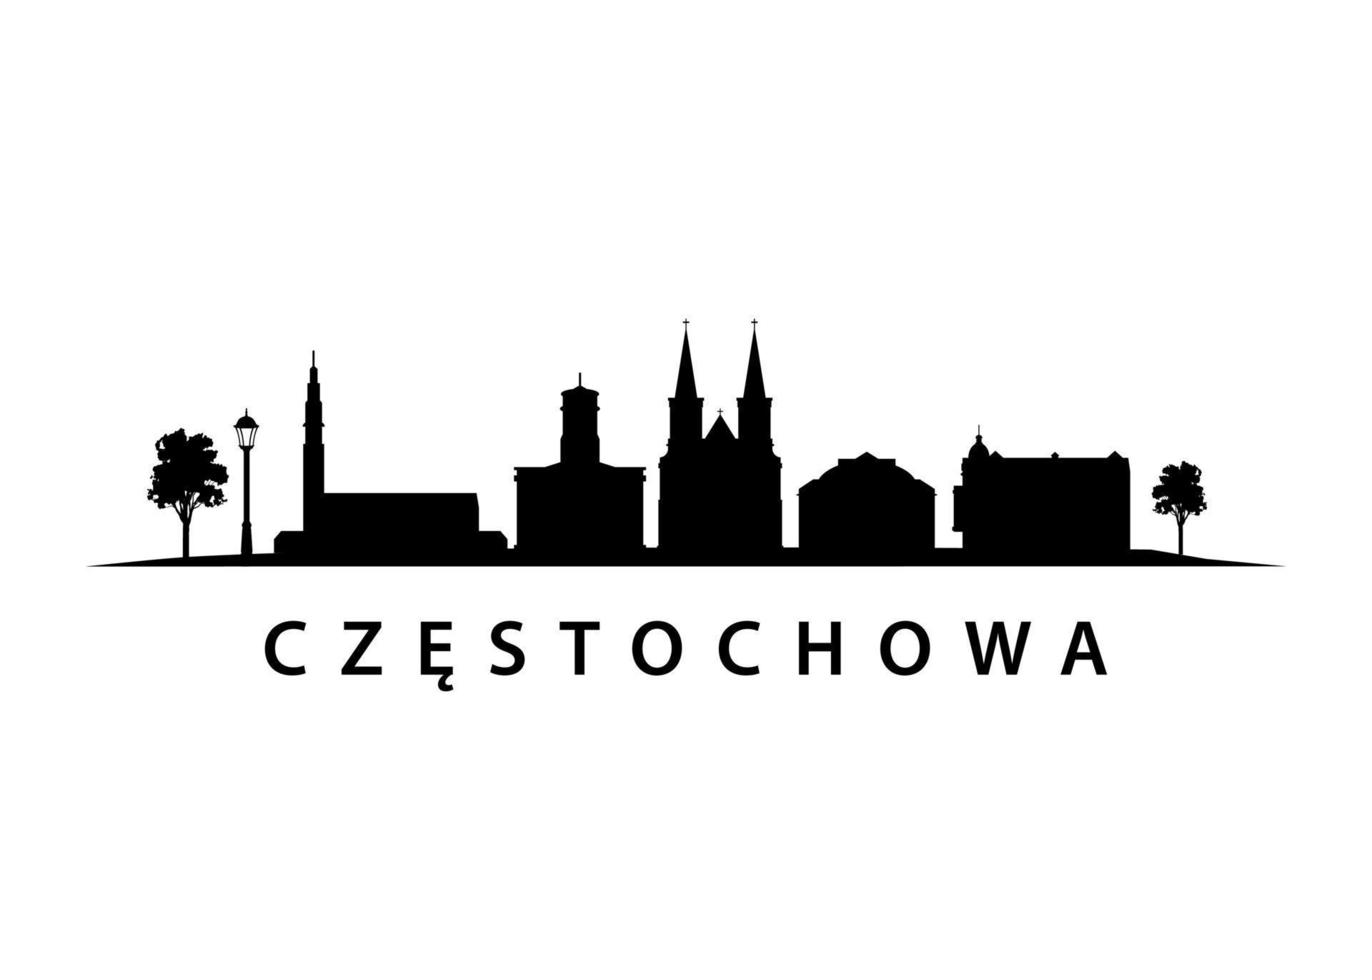 Czestochowa City Skyline, Urban Landscape in Poland, Architecture of Eastern Europe vector